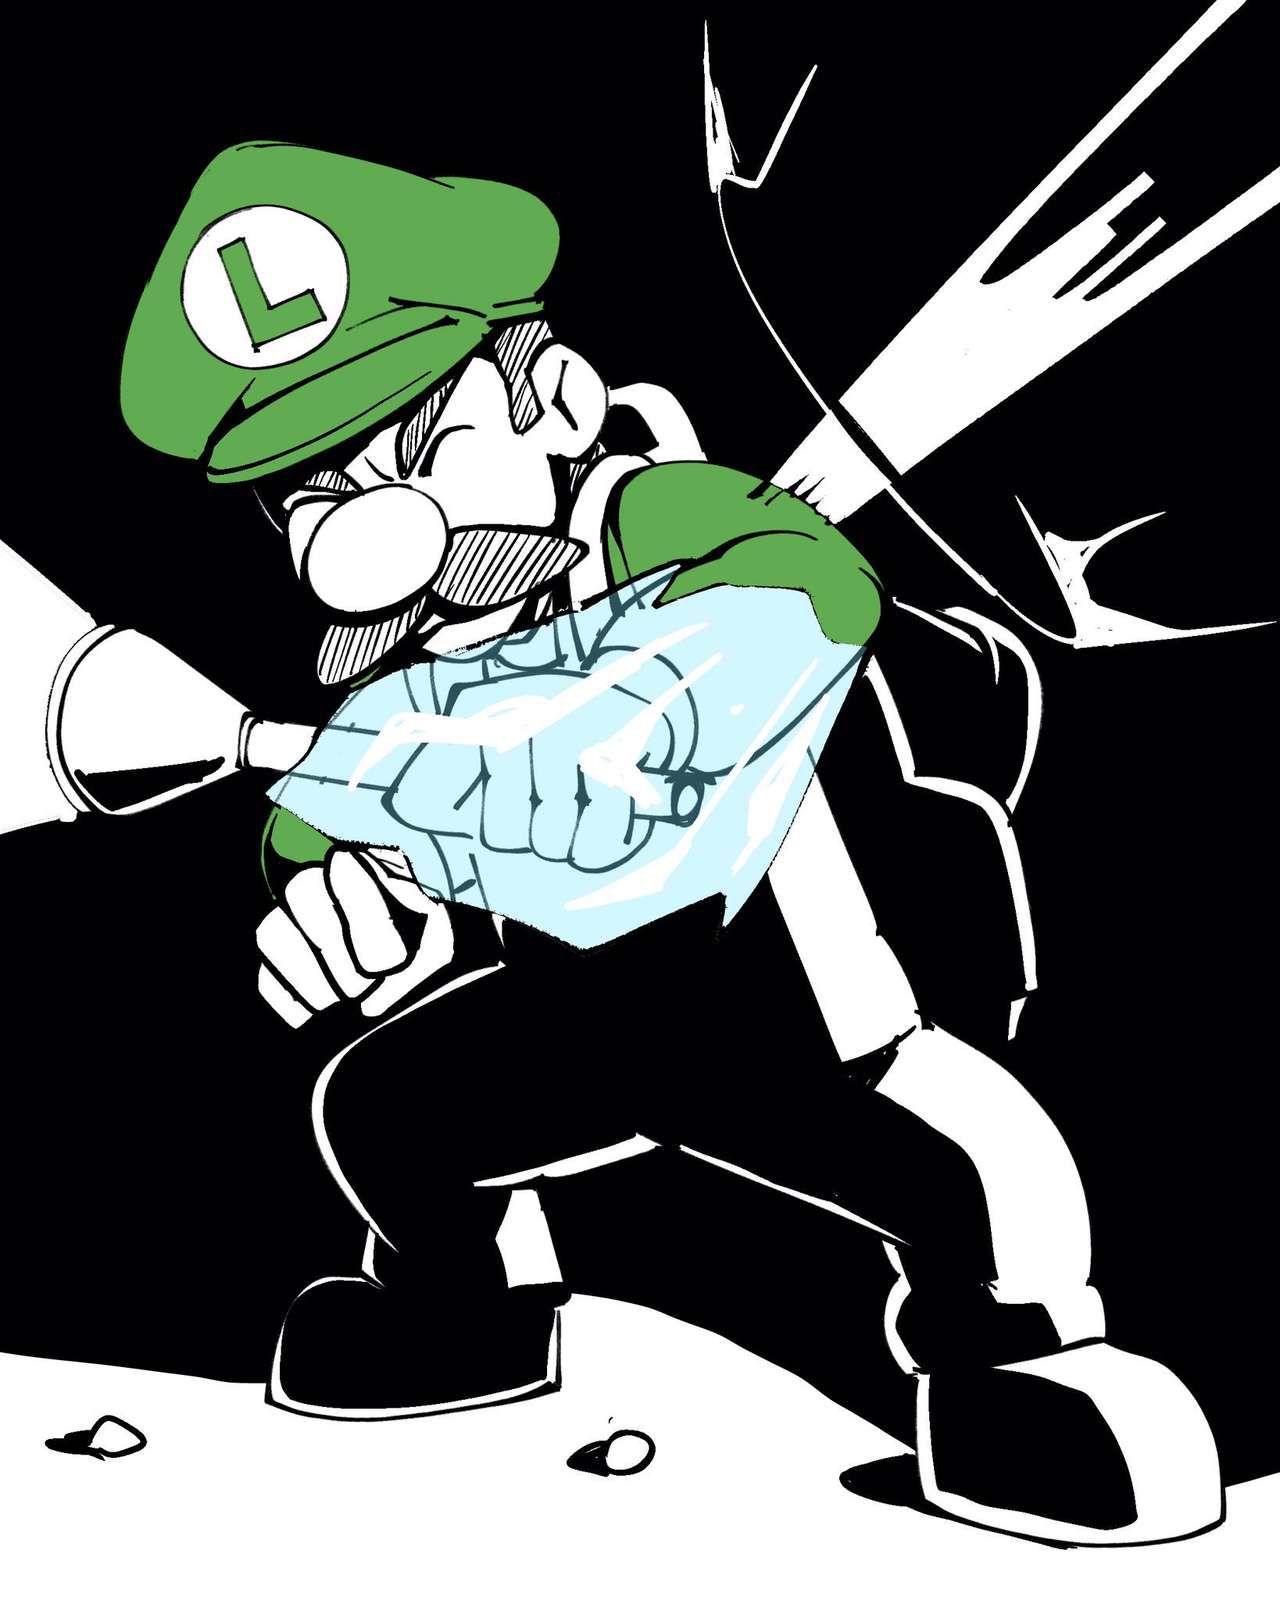 [Nisego] Inktober 2 - Luigi's Mansion (Super Mario Bros.) [Ongoing] 15